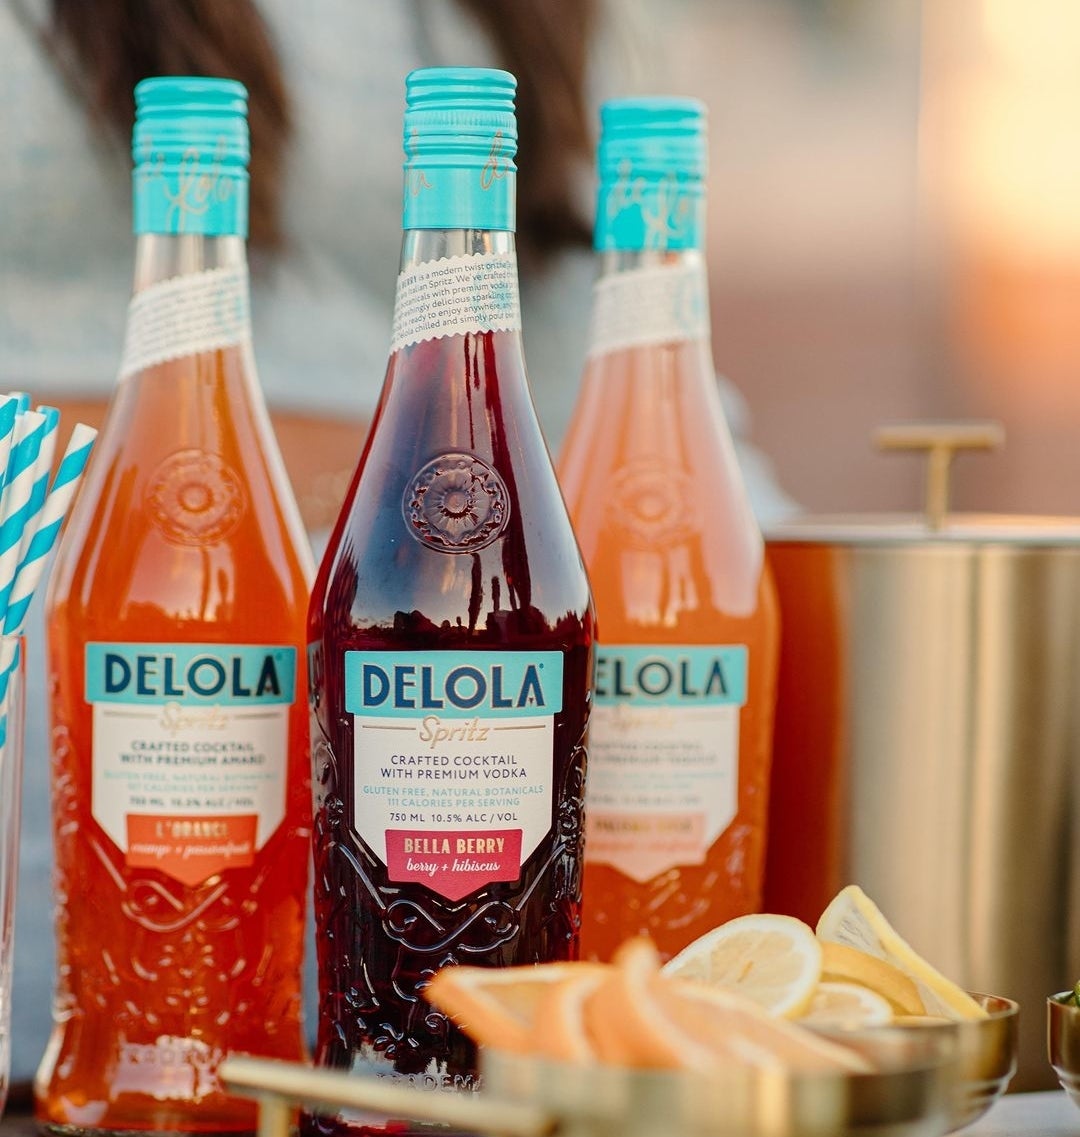 Three bottles of Delola next to bartending ingredients.